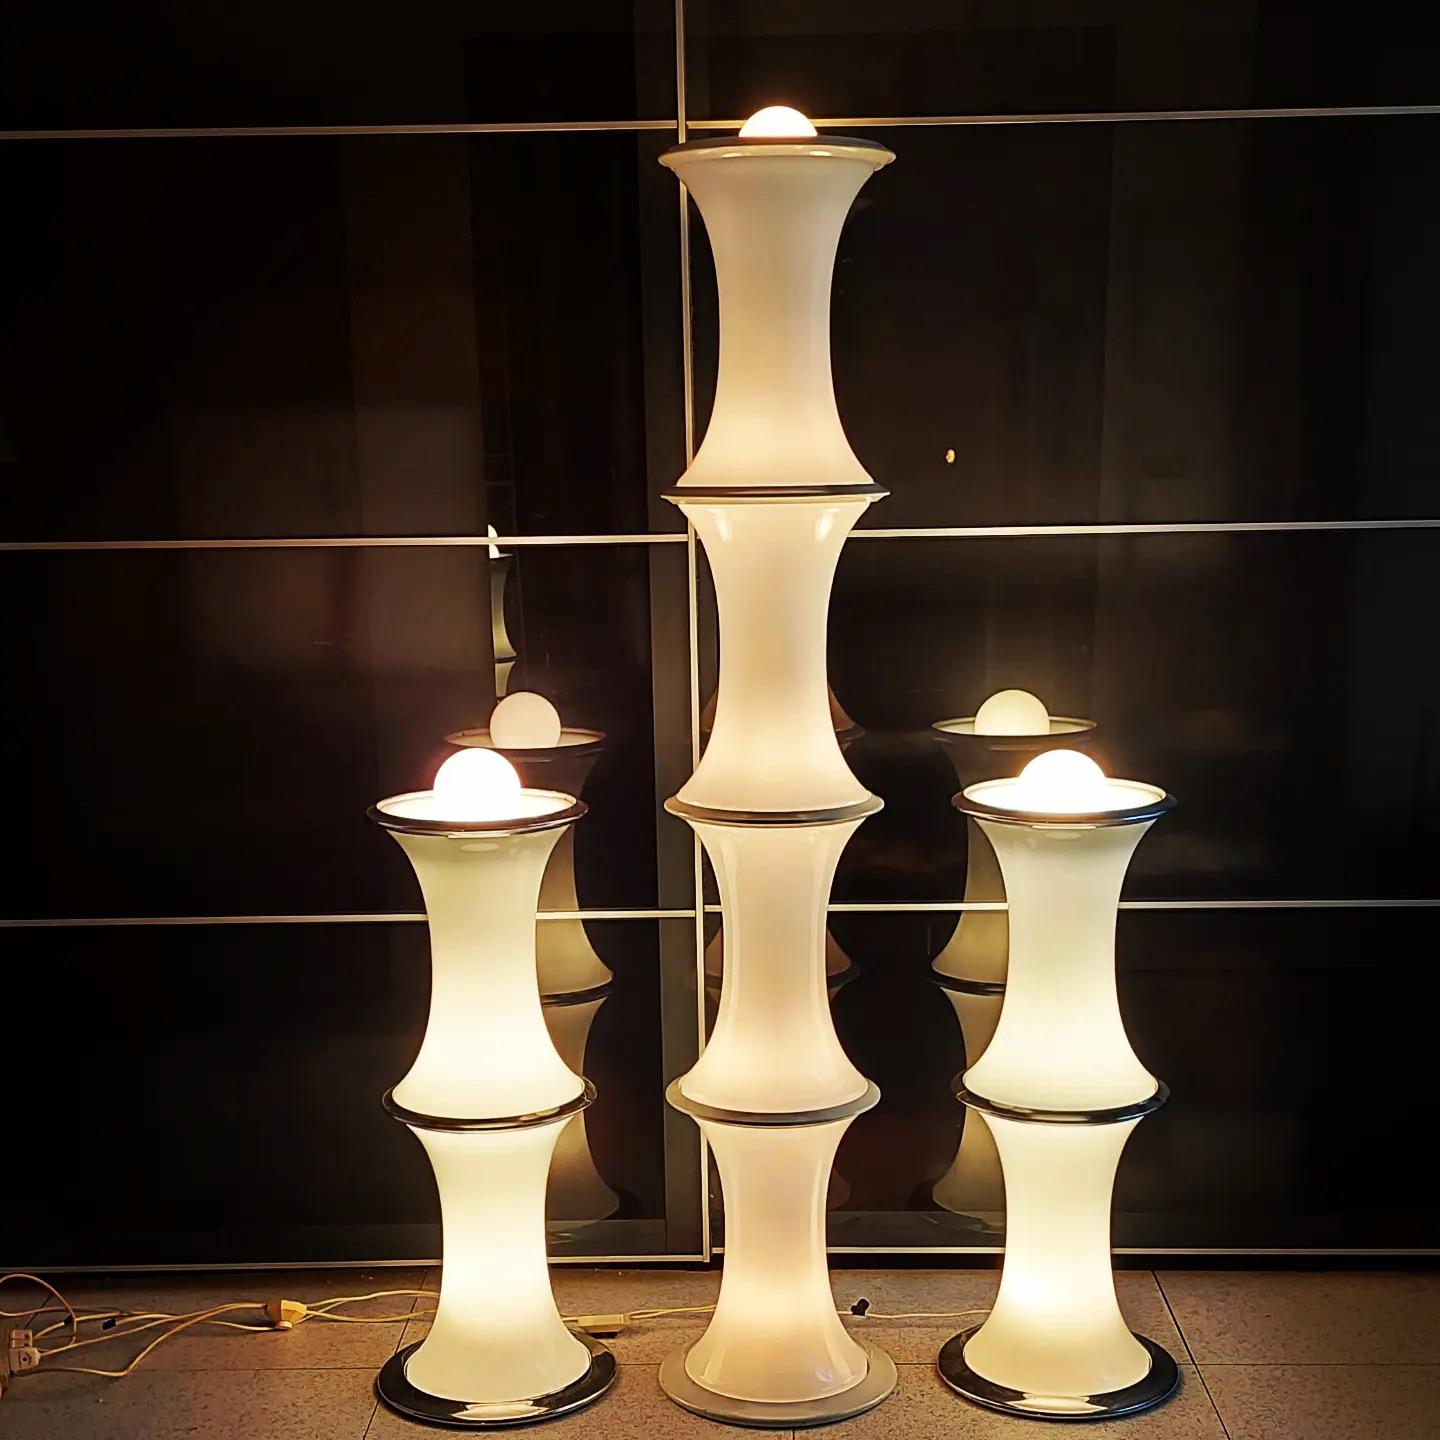 Lampada Tronconi mod. bamboo a 4 elementi